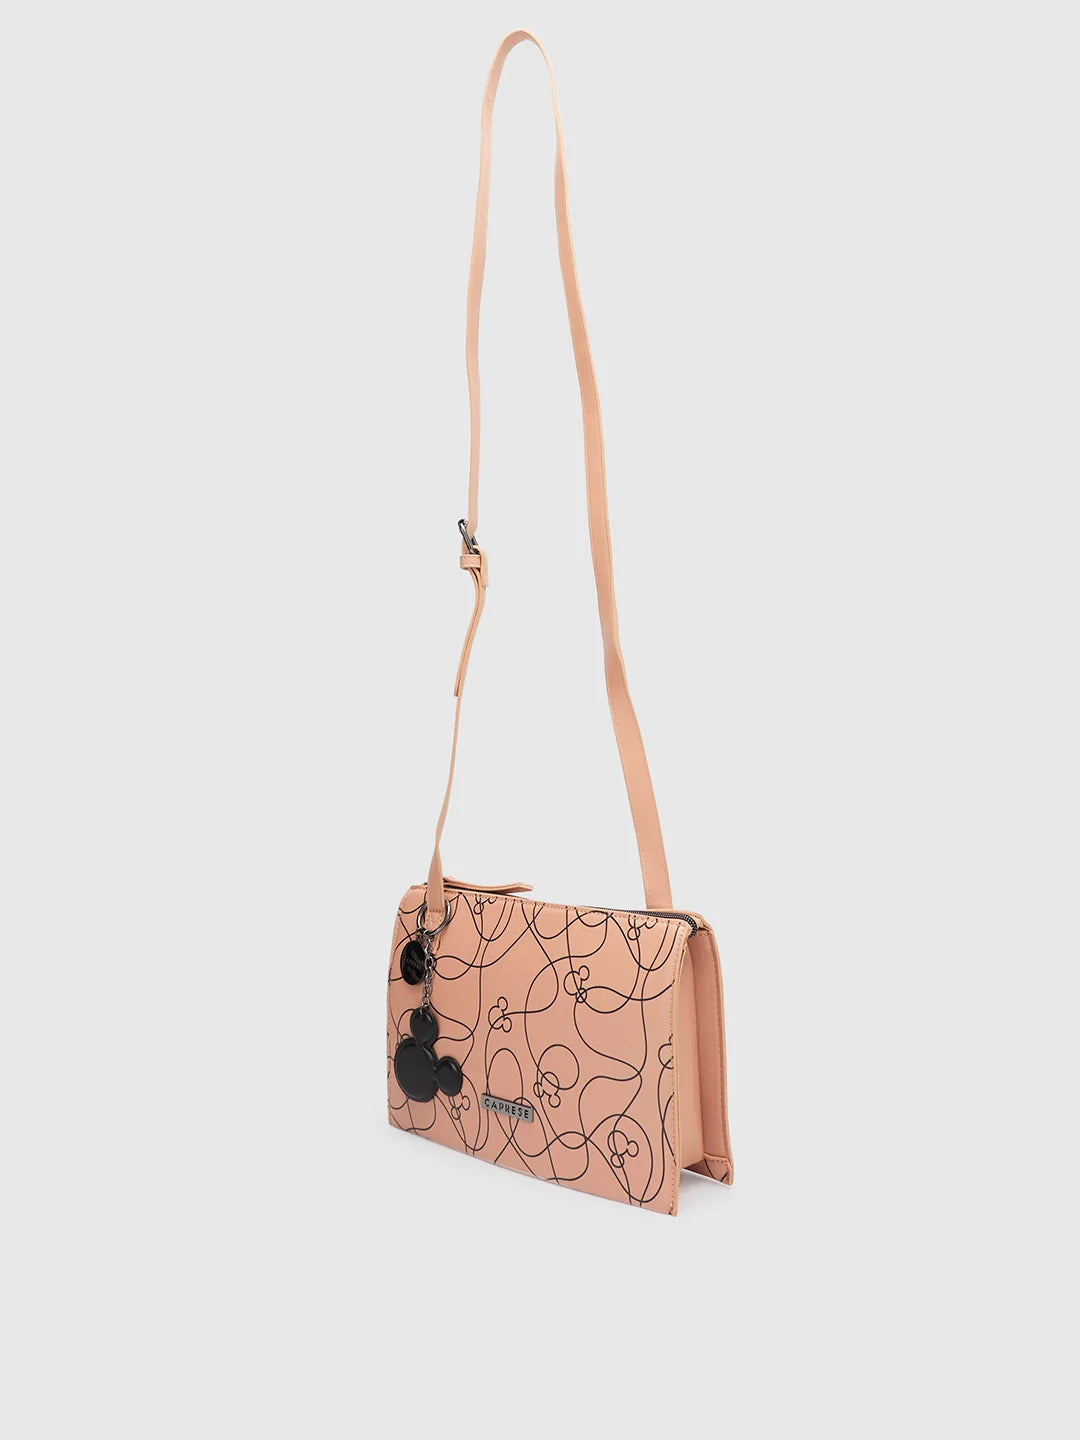 Caprese Disney Inspired Printed Mickey Mouse Collection Sling Medium Handbag